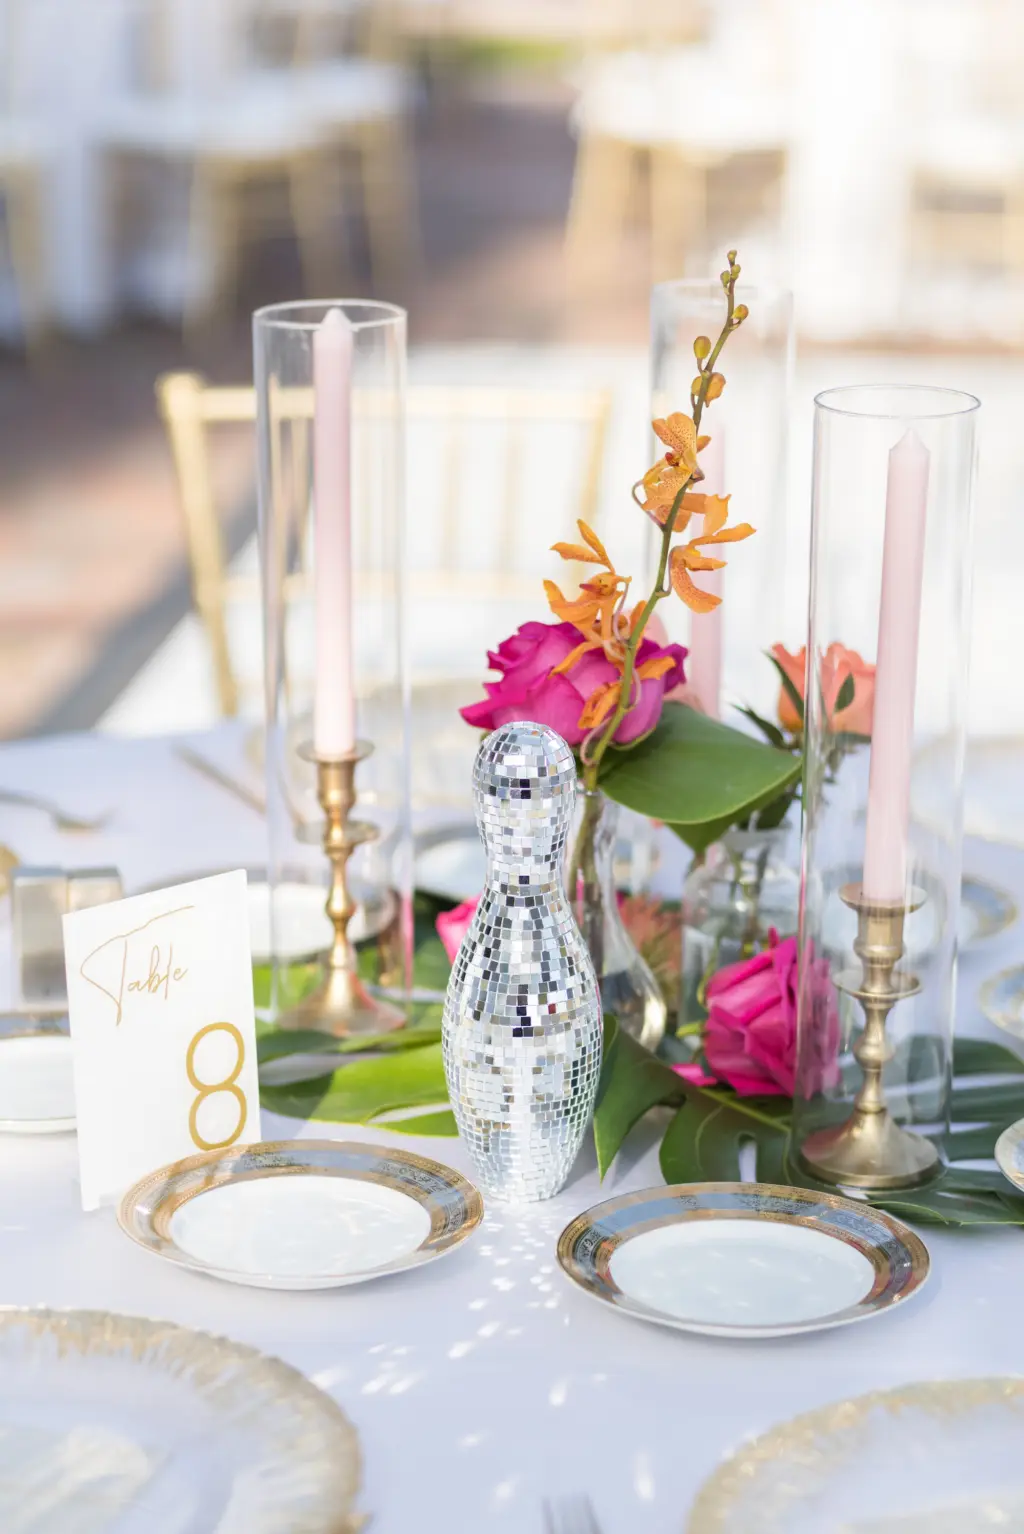 Tablescape Decor for Tropical Bright and Vibrant Wedding Reception with Disco Ball Centerpiece Ideas